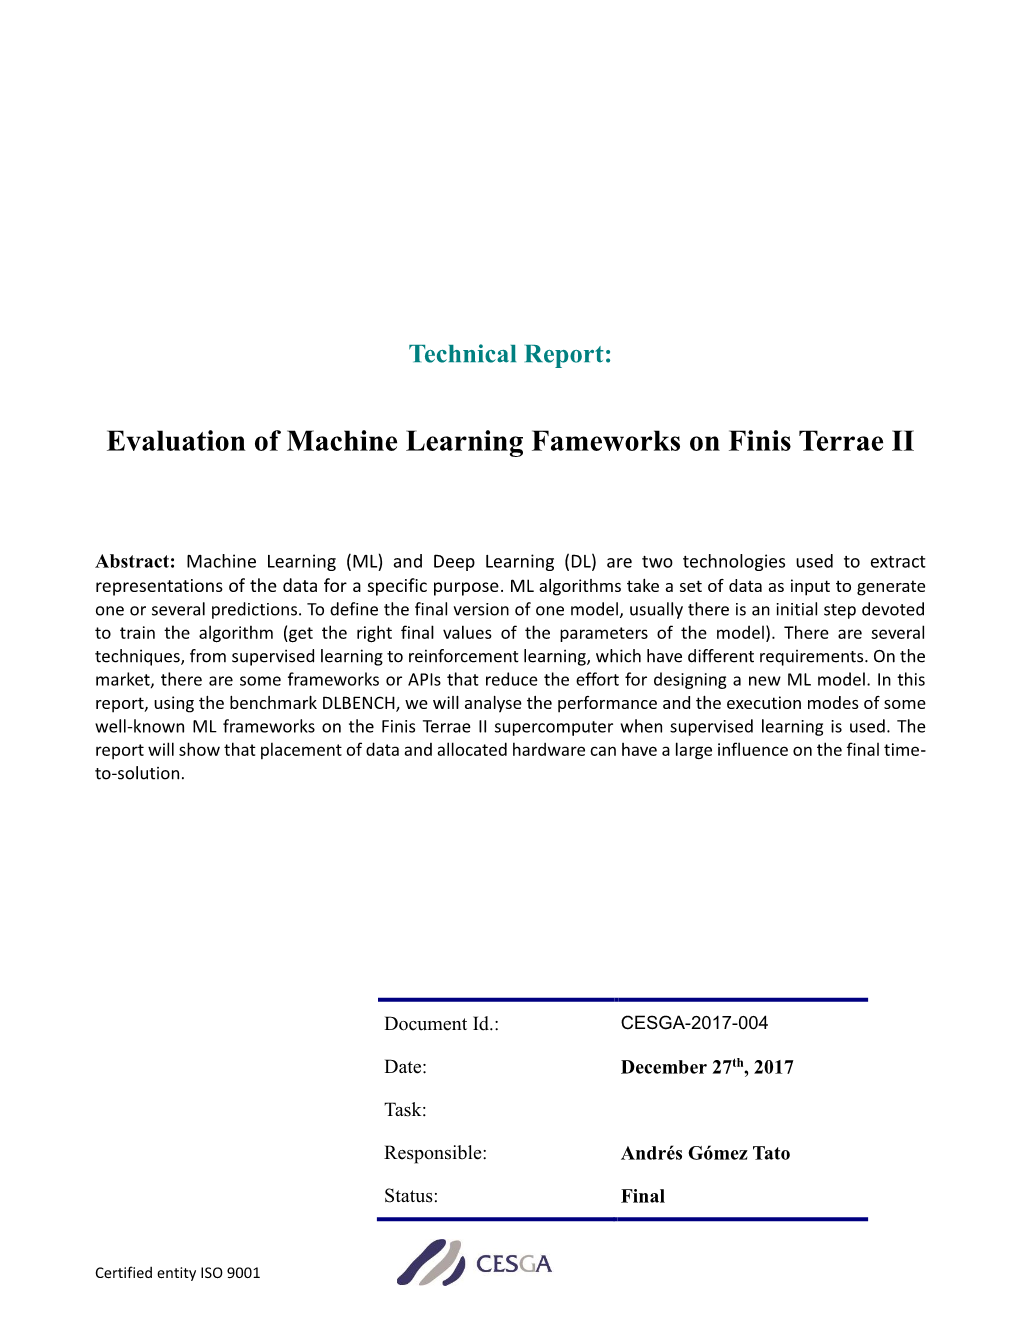 Evaluation of Machine Learning Fameworks on Finis Terrae II